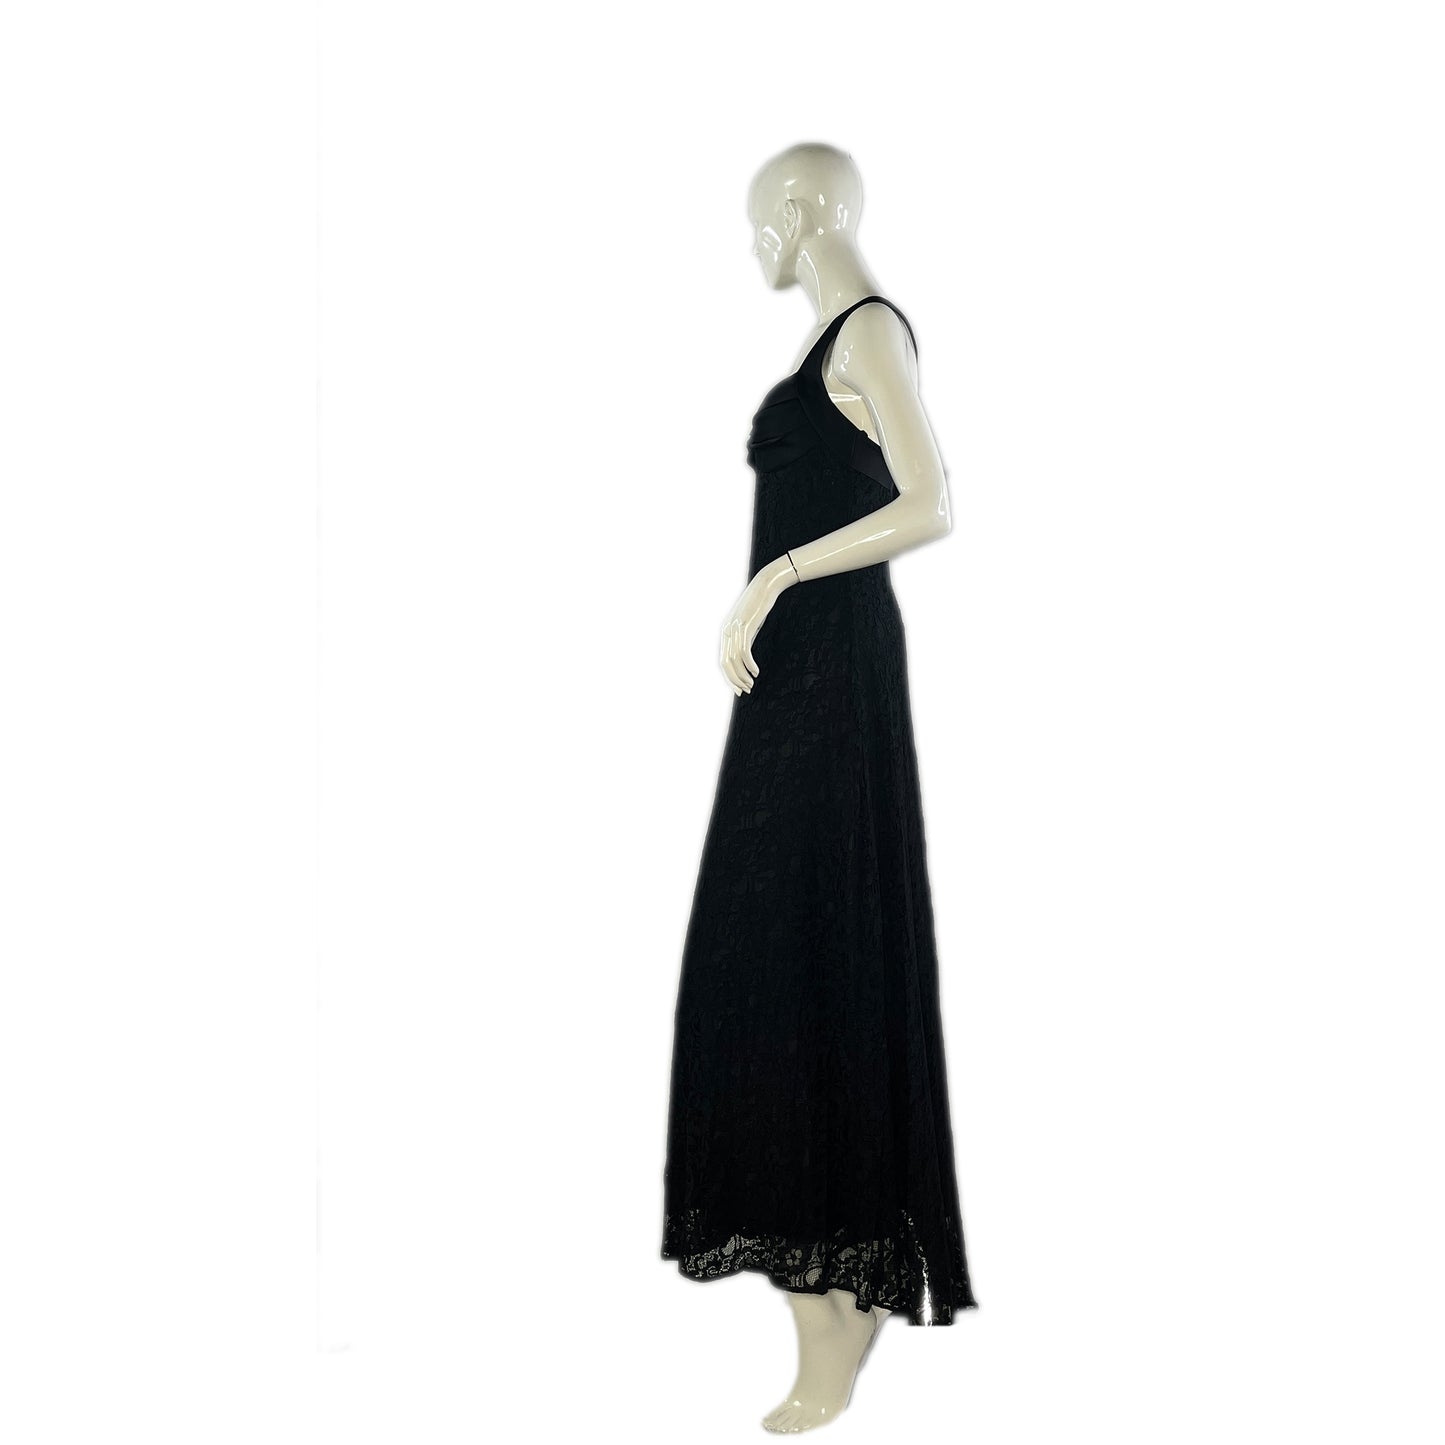 Calvin Klein Dress Sleeveless Floor-Length Lace Black Size 6 SKU 000138-6